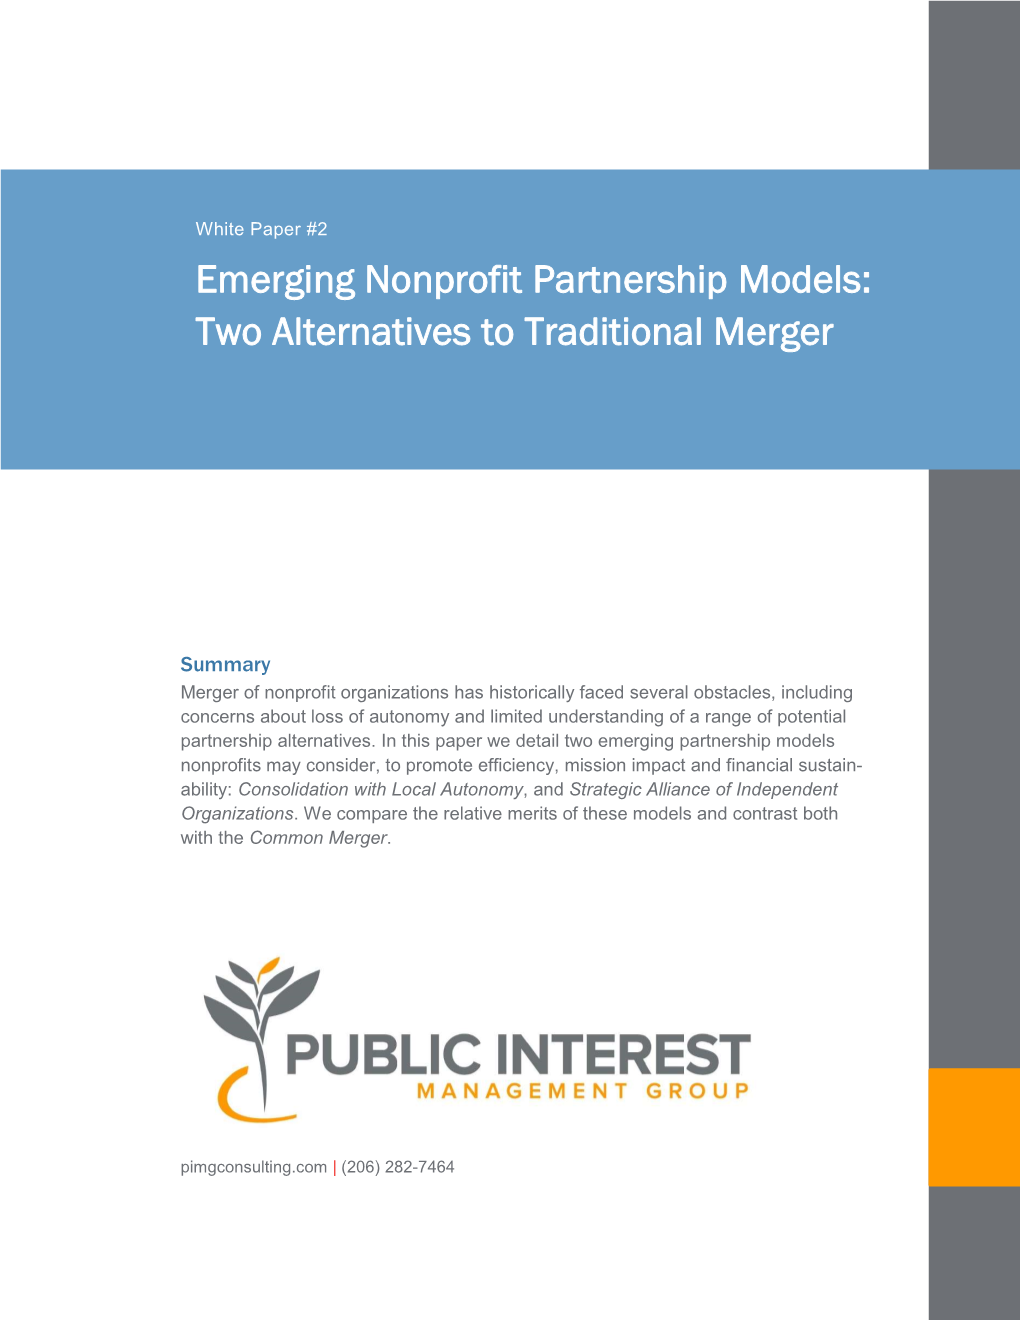 Emerging Nonprofit Partnership Models: Two Alternatives To